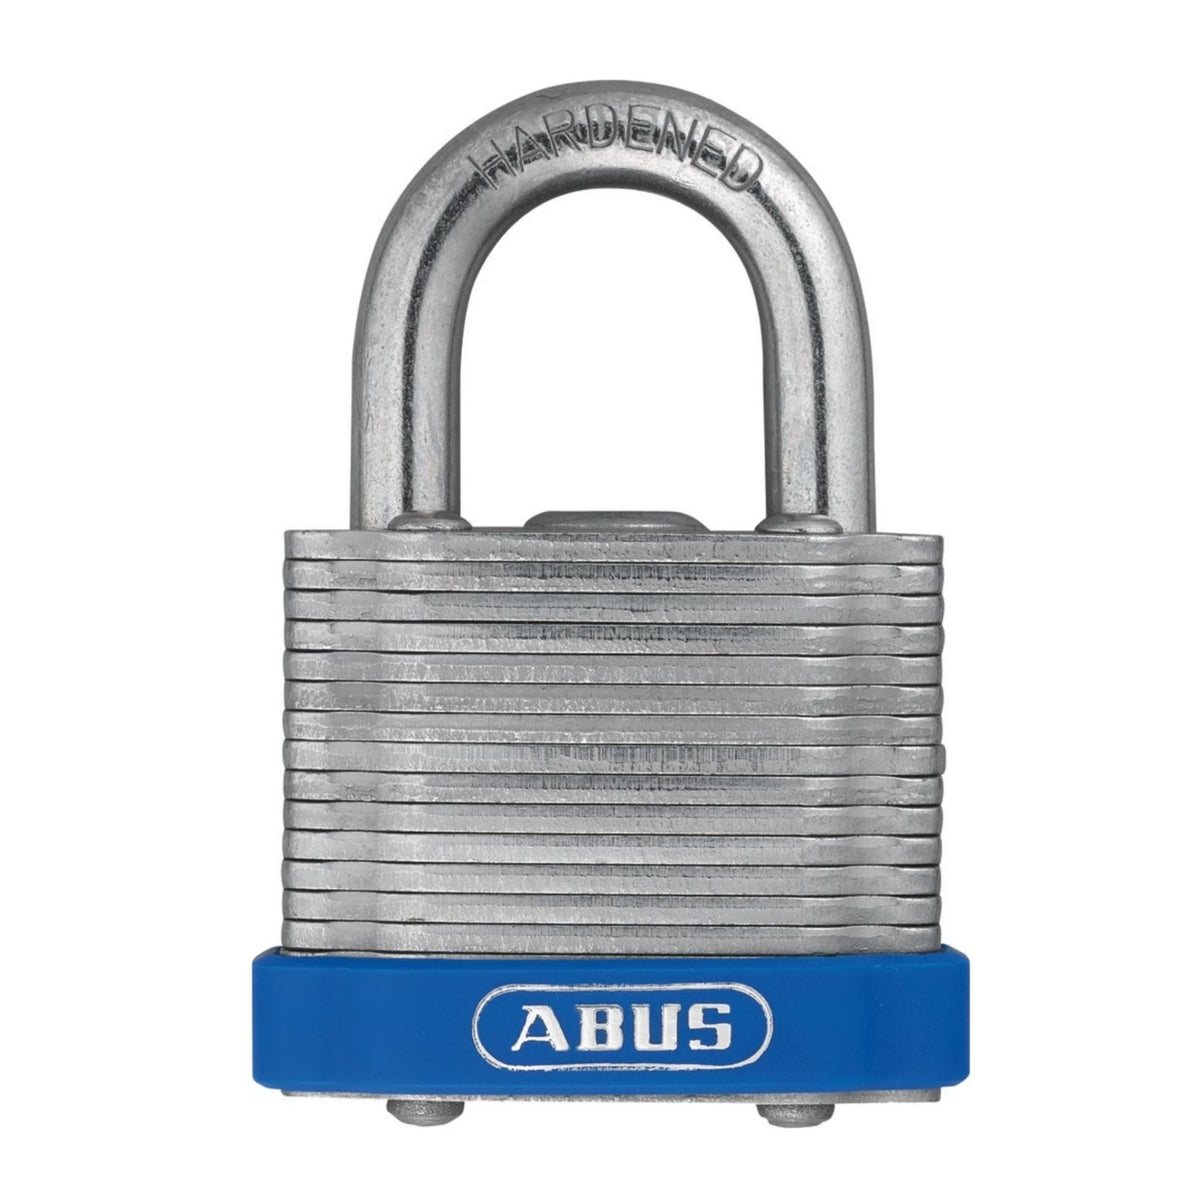 Abus 41/40 KA EE 0036 Laminated Steel Padlock with Blue Bumper Keyed Alike to Match Existing Key Number KA EE0036 - The Lock Source